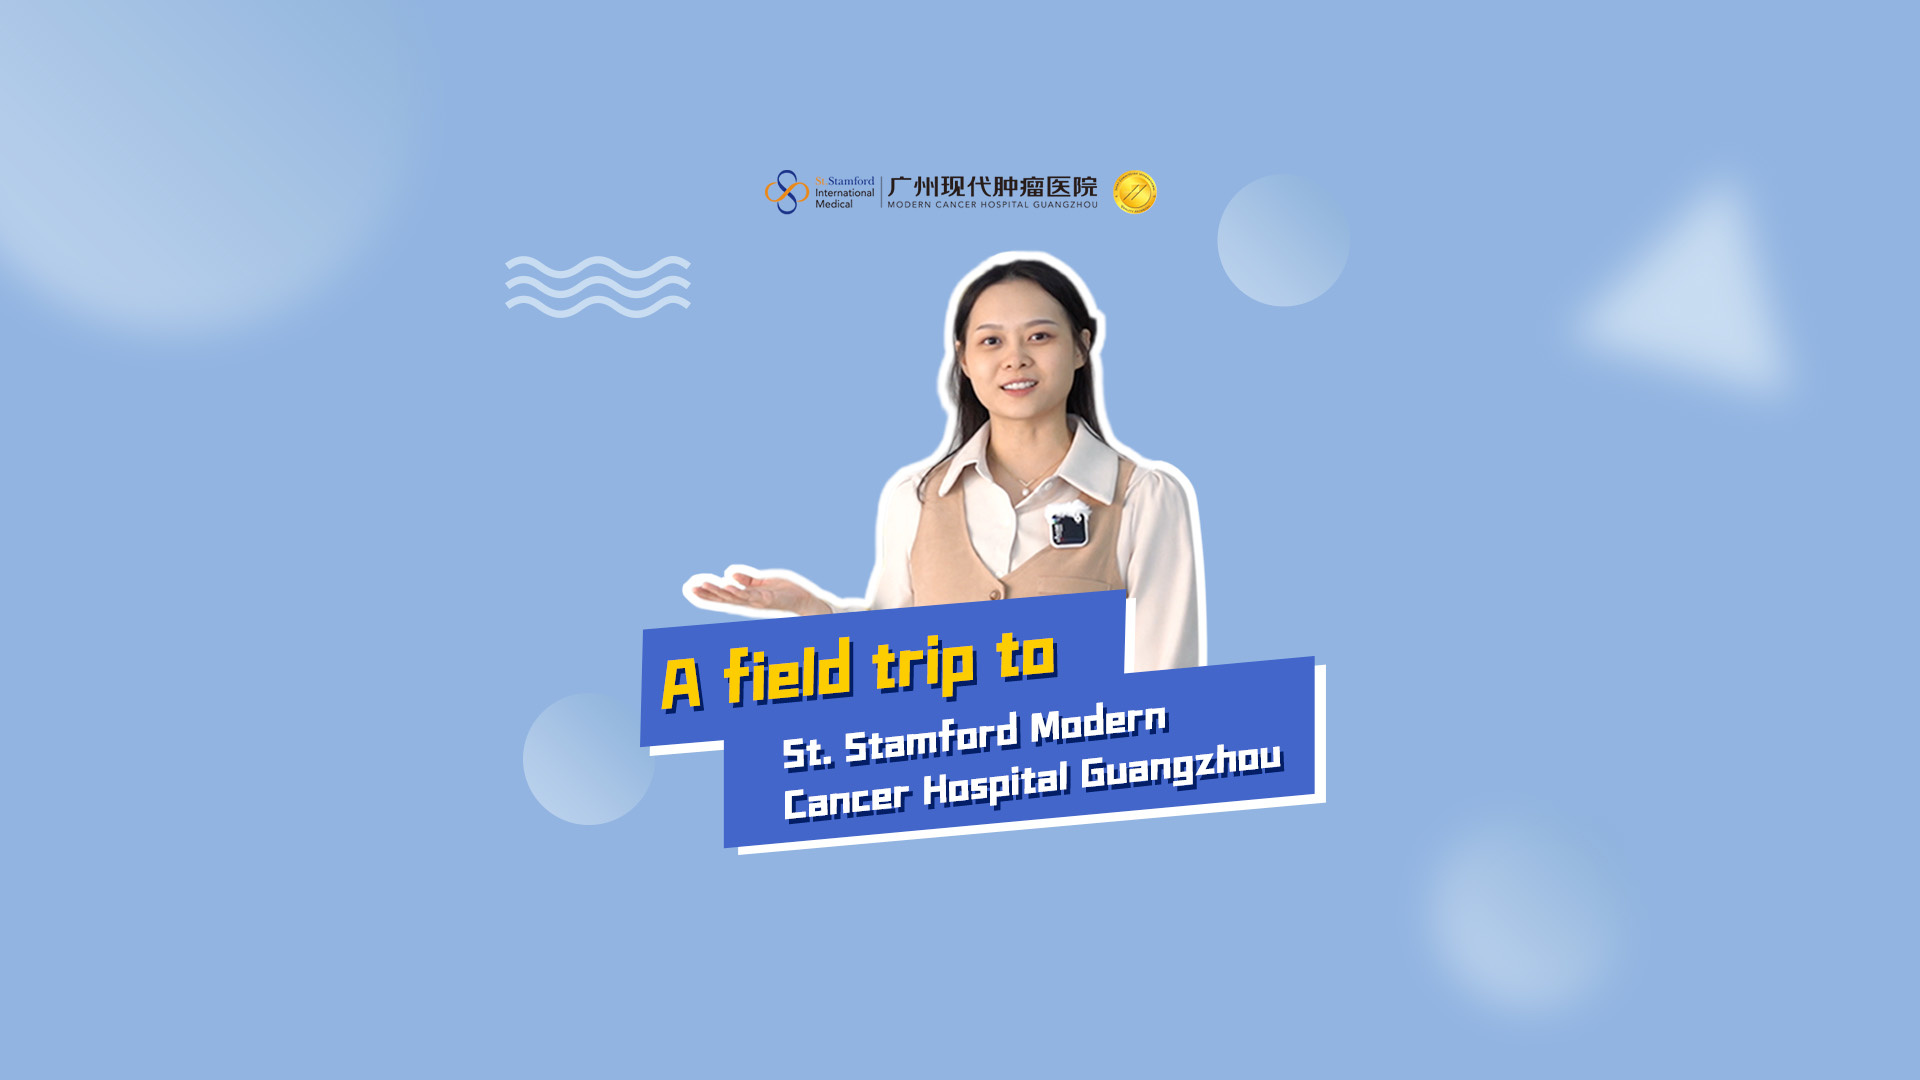 A field trip to St. Stamford Modern Cancer Hospital Guangzhou